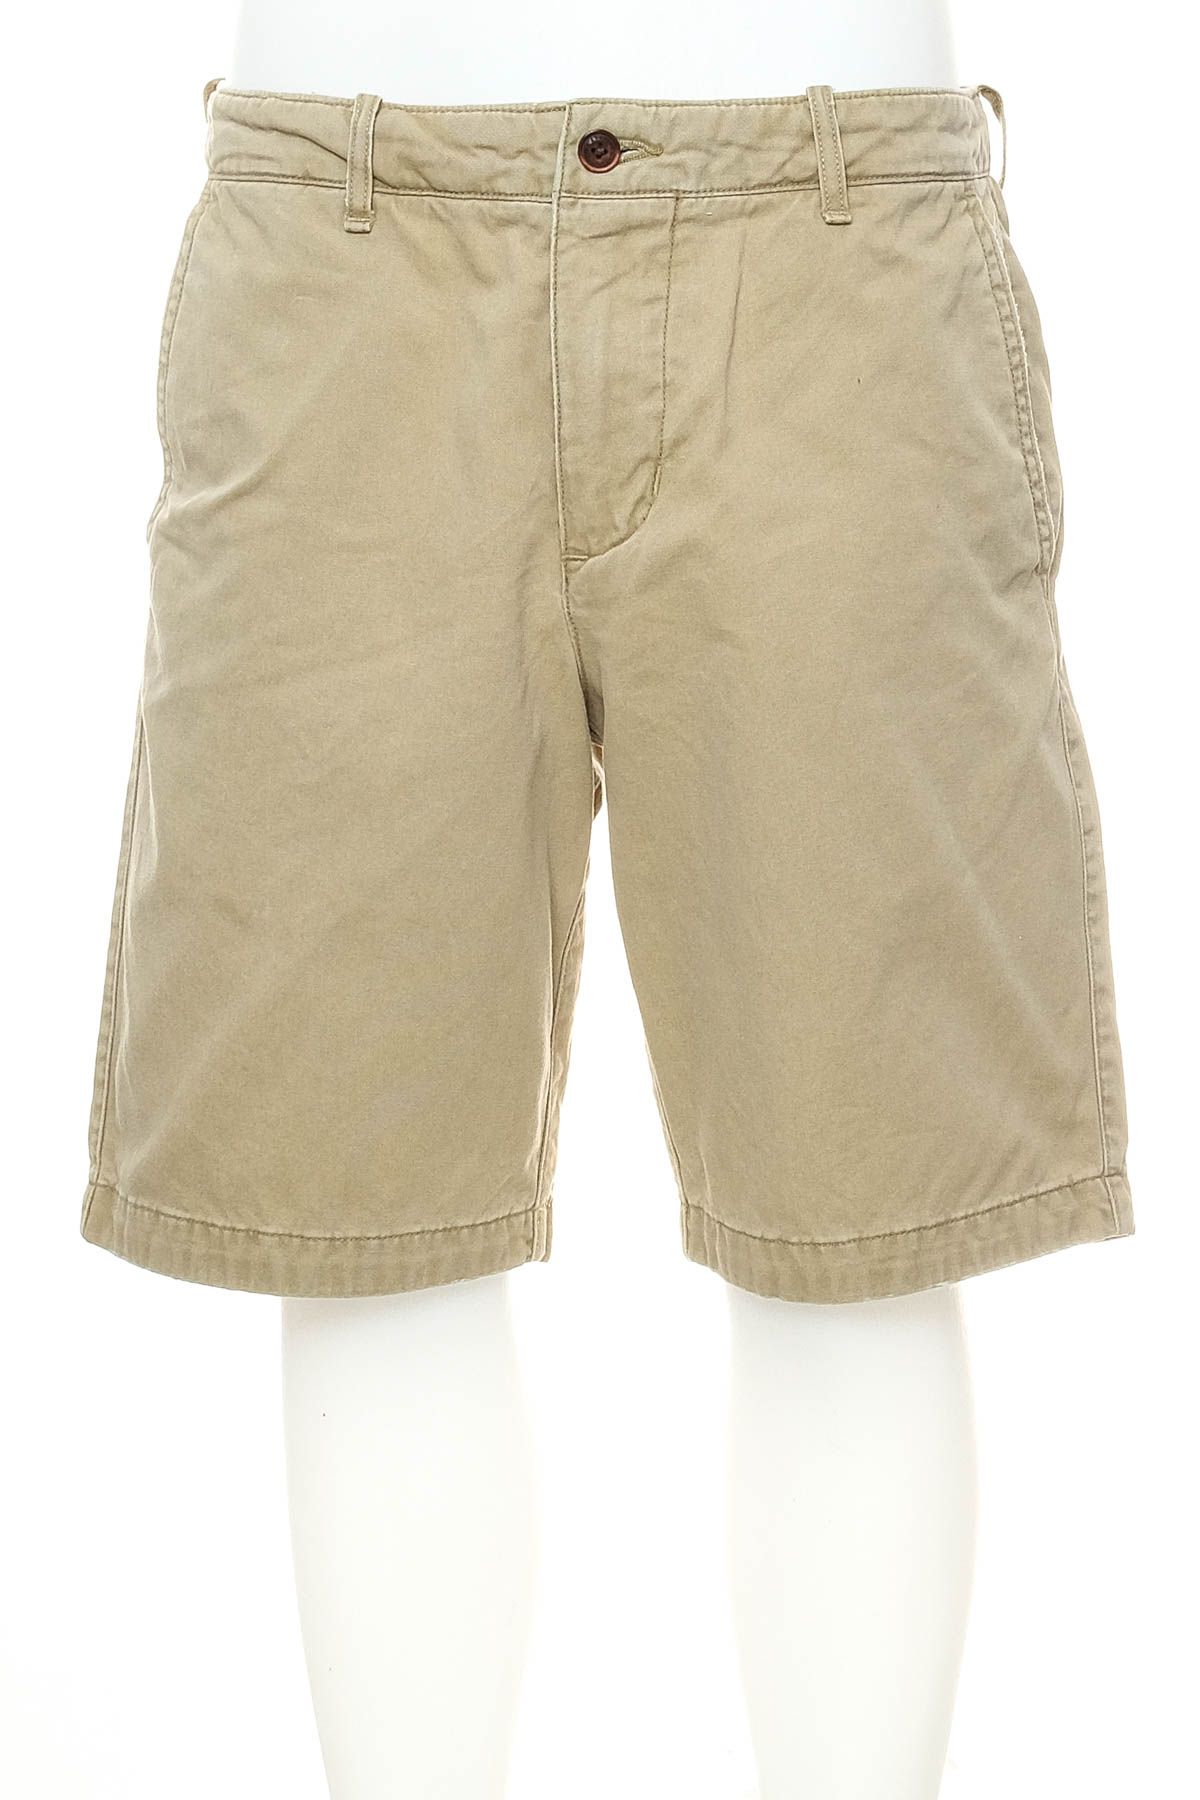 Men's shorts - Abercrombie & Fitch - 0